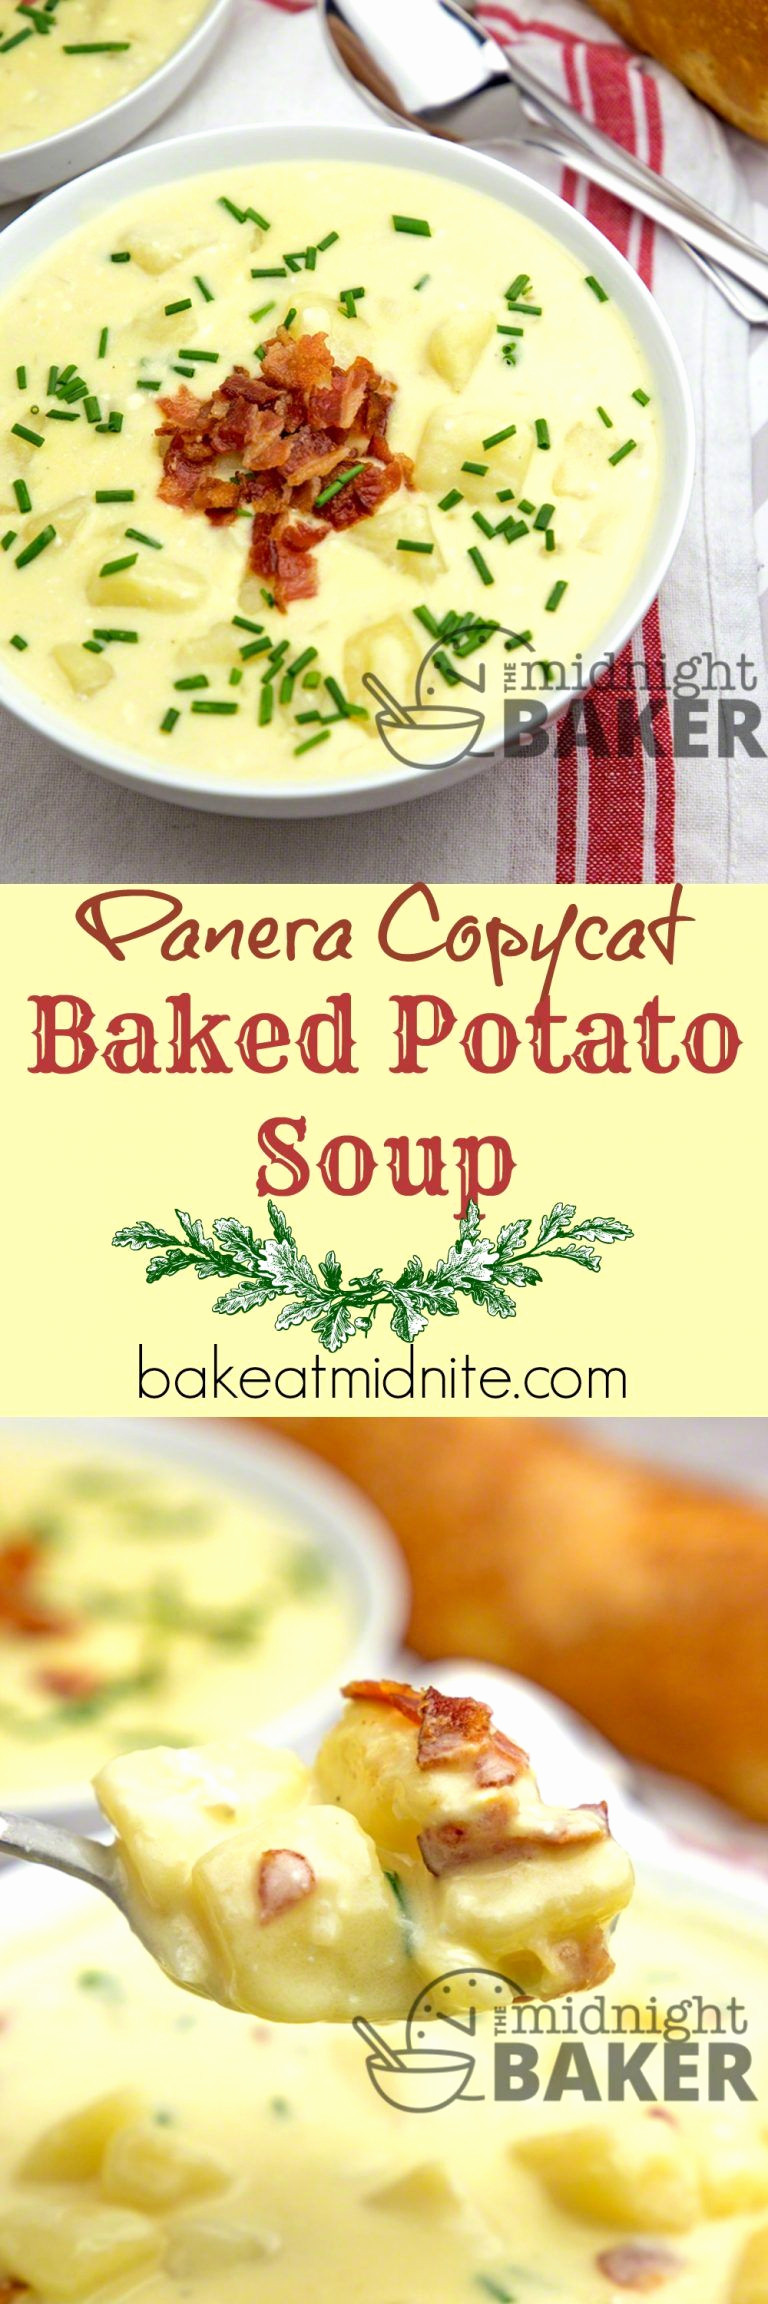 Panera Bread Baked Potato Soup Bread Bowl
 Panera Bread Baked Potato soup Recipe